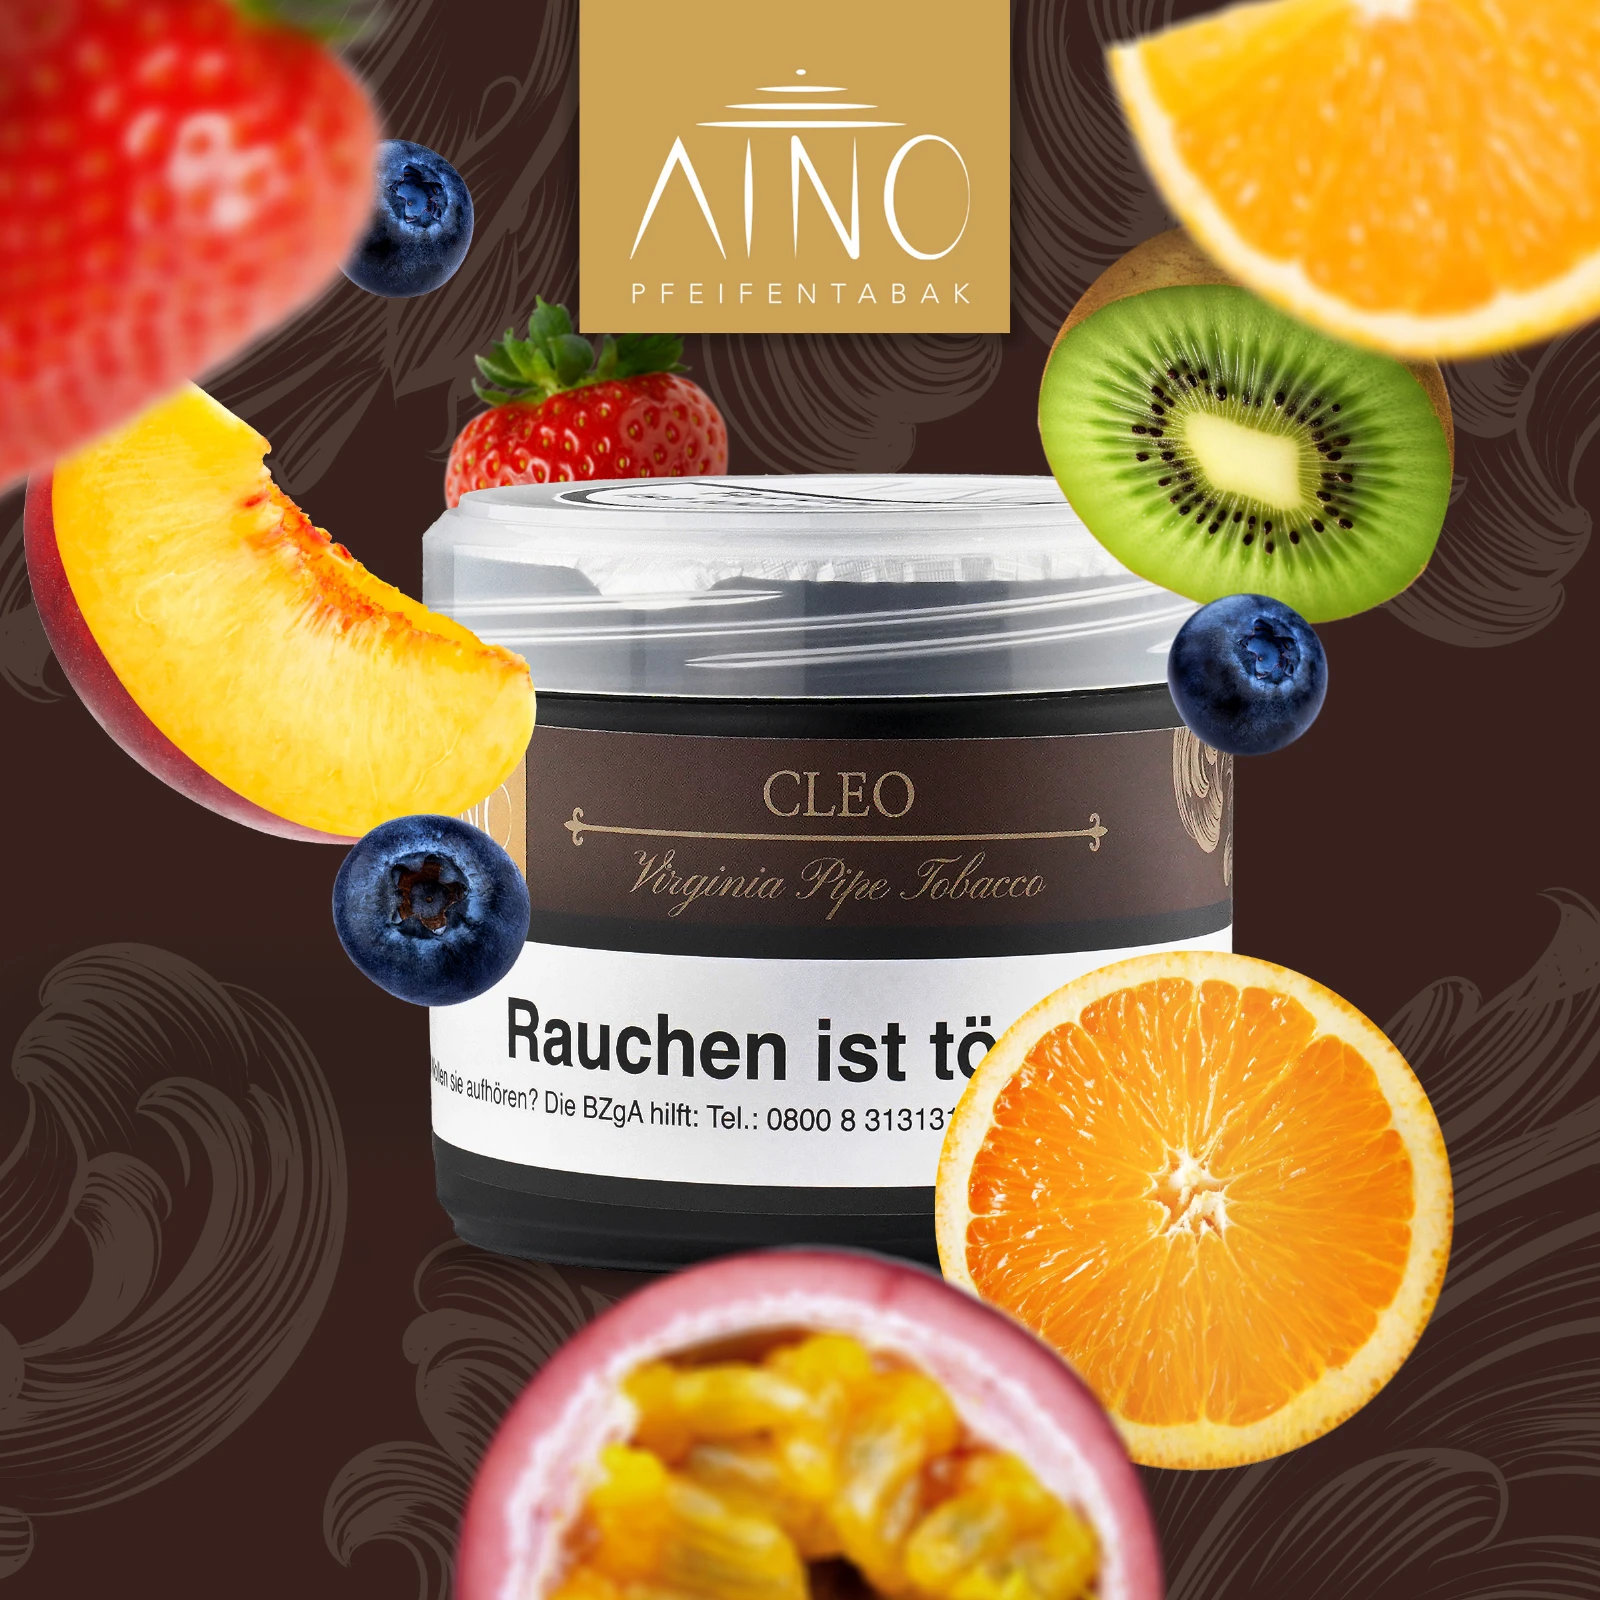 Aino Dry Base Pfeifentabak Cleo 65g | Online bestellen 1